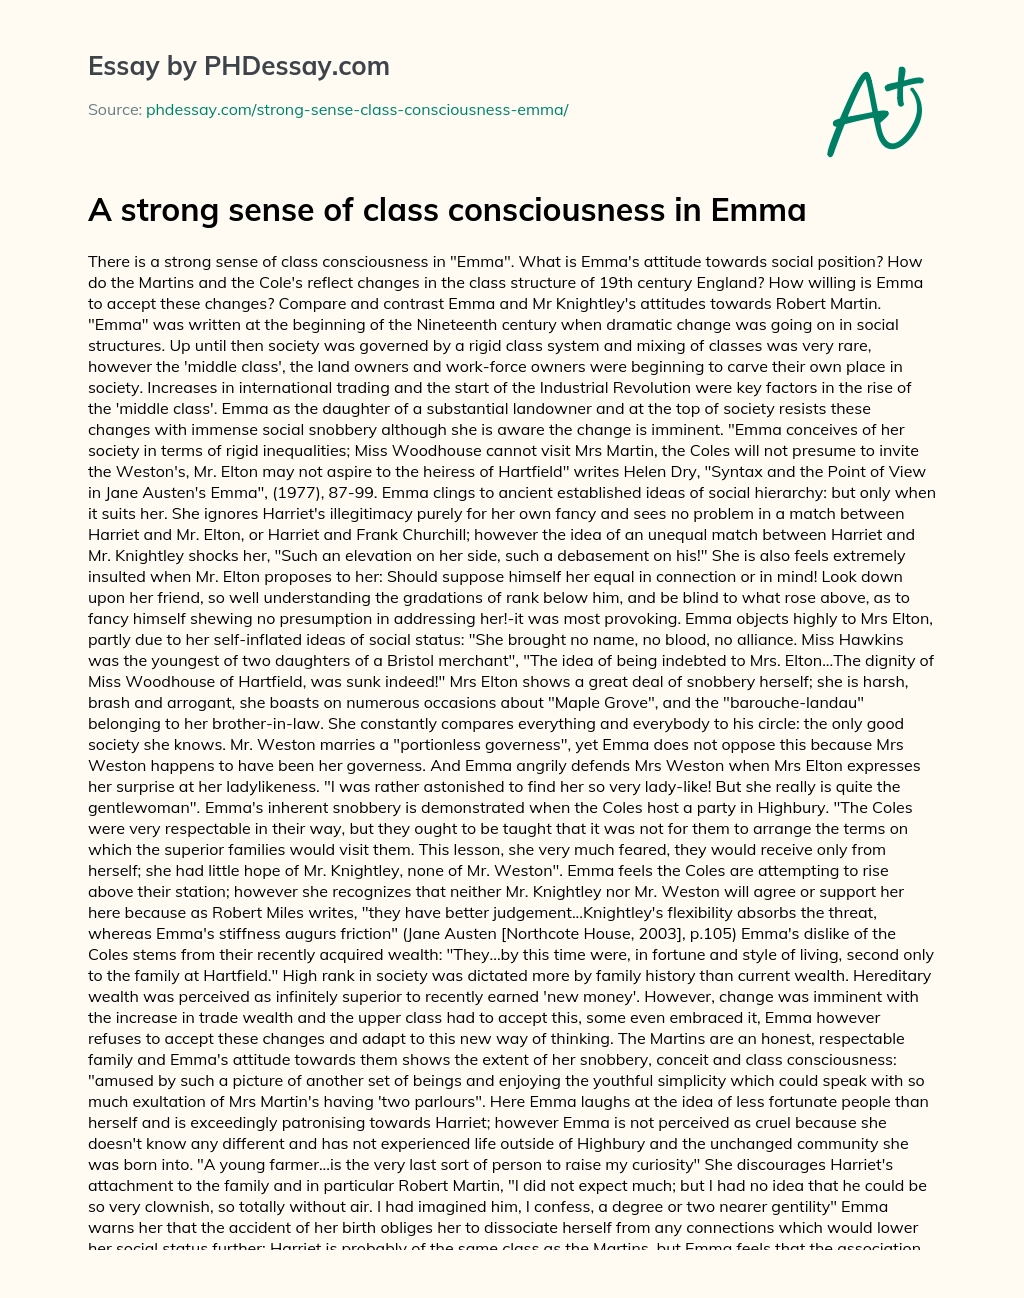 A strong sense of class consciousness in Emma essay